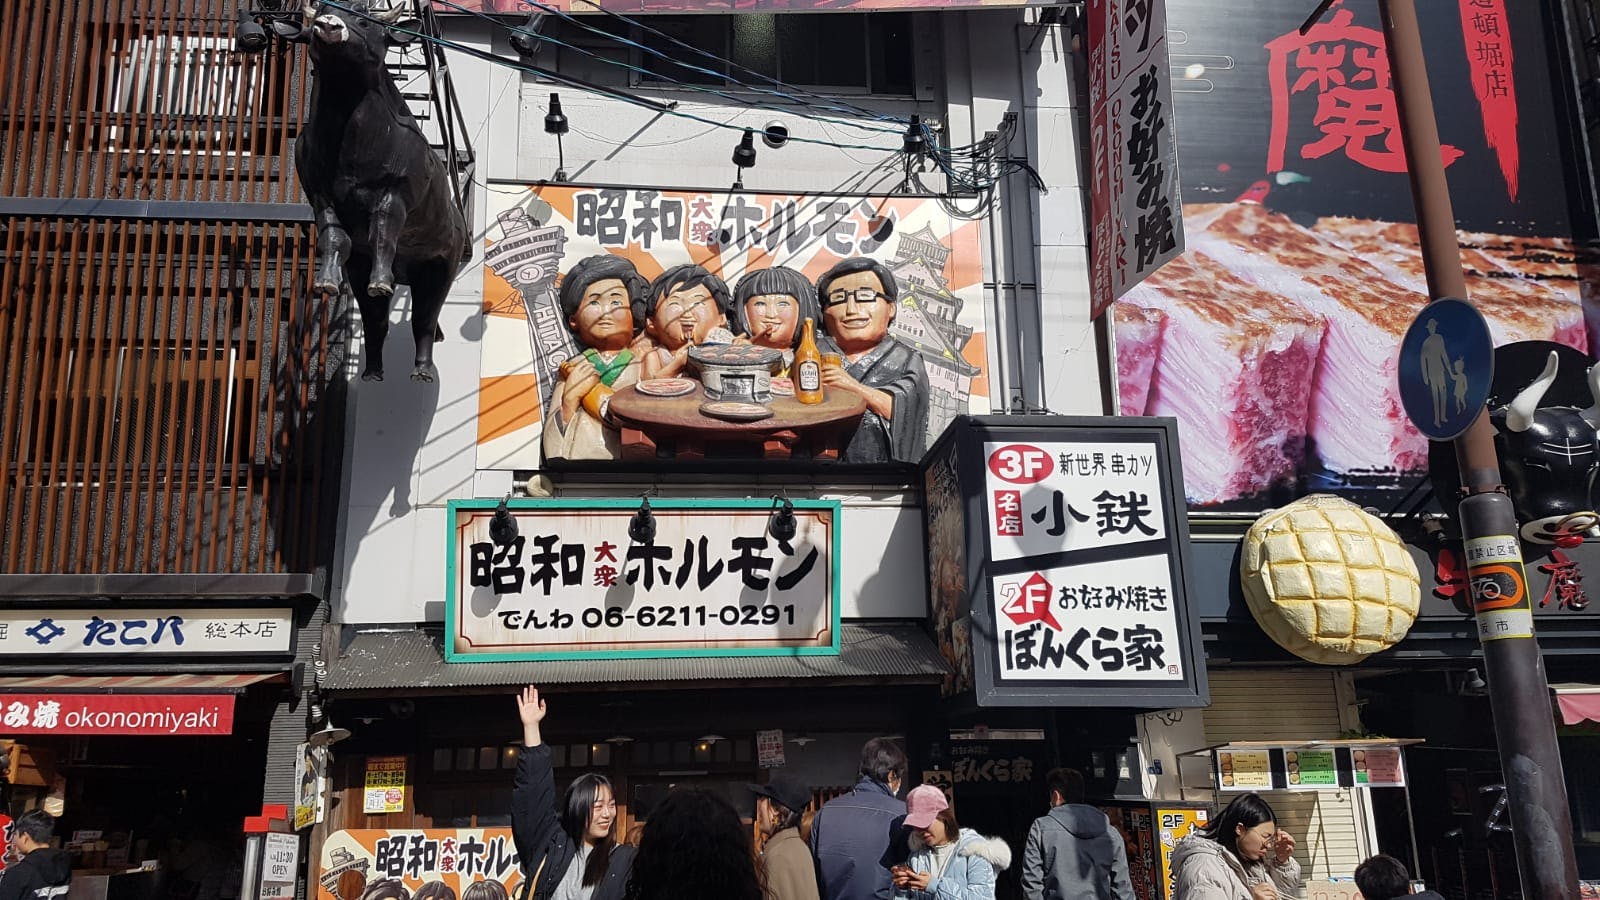 Osaka popular Japanese foods origins city game and tour